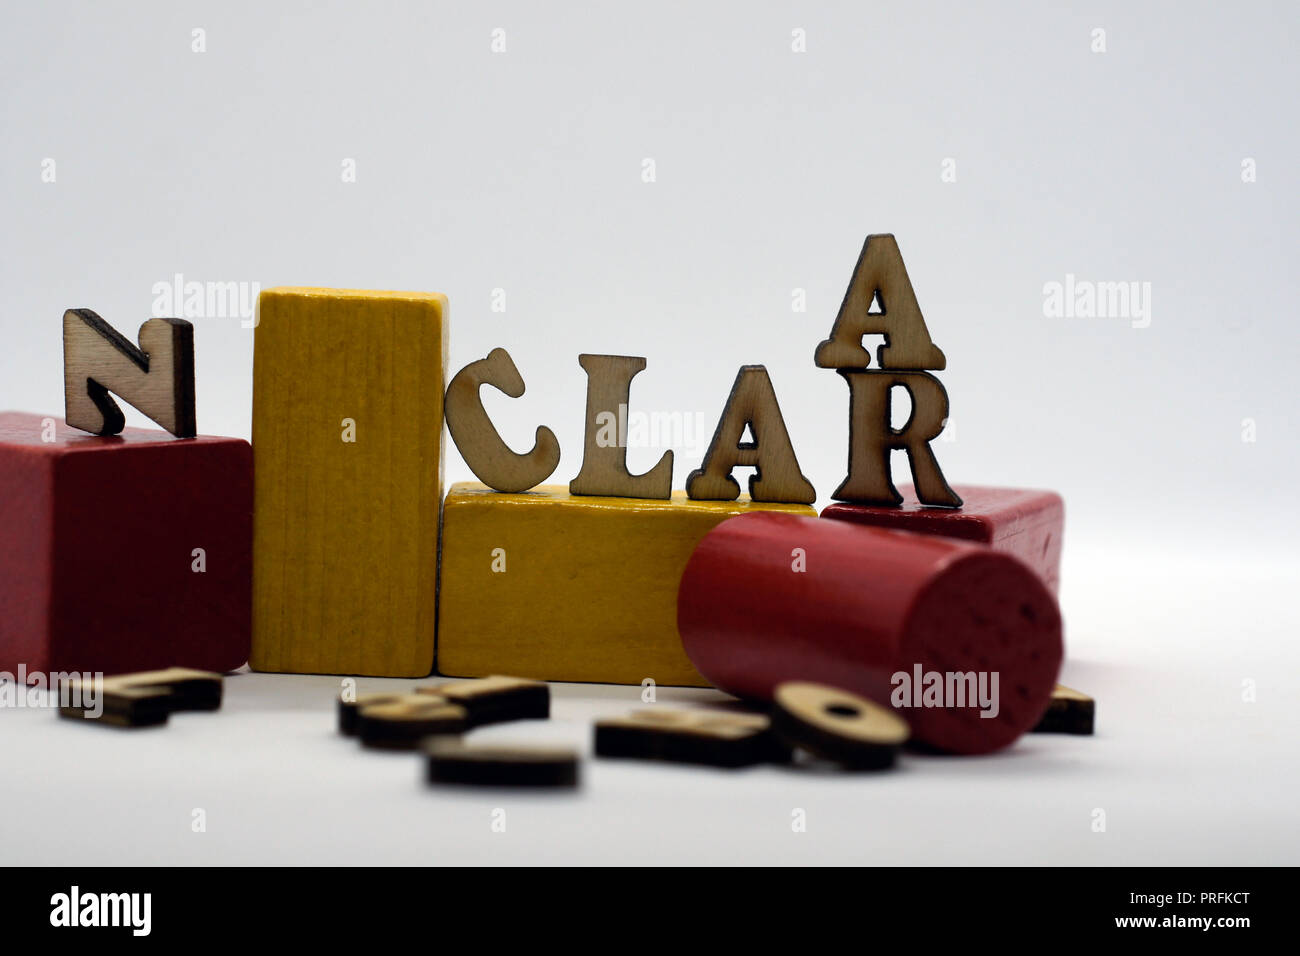 popular female first name clara Stock Photo